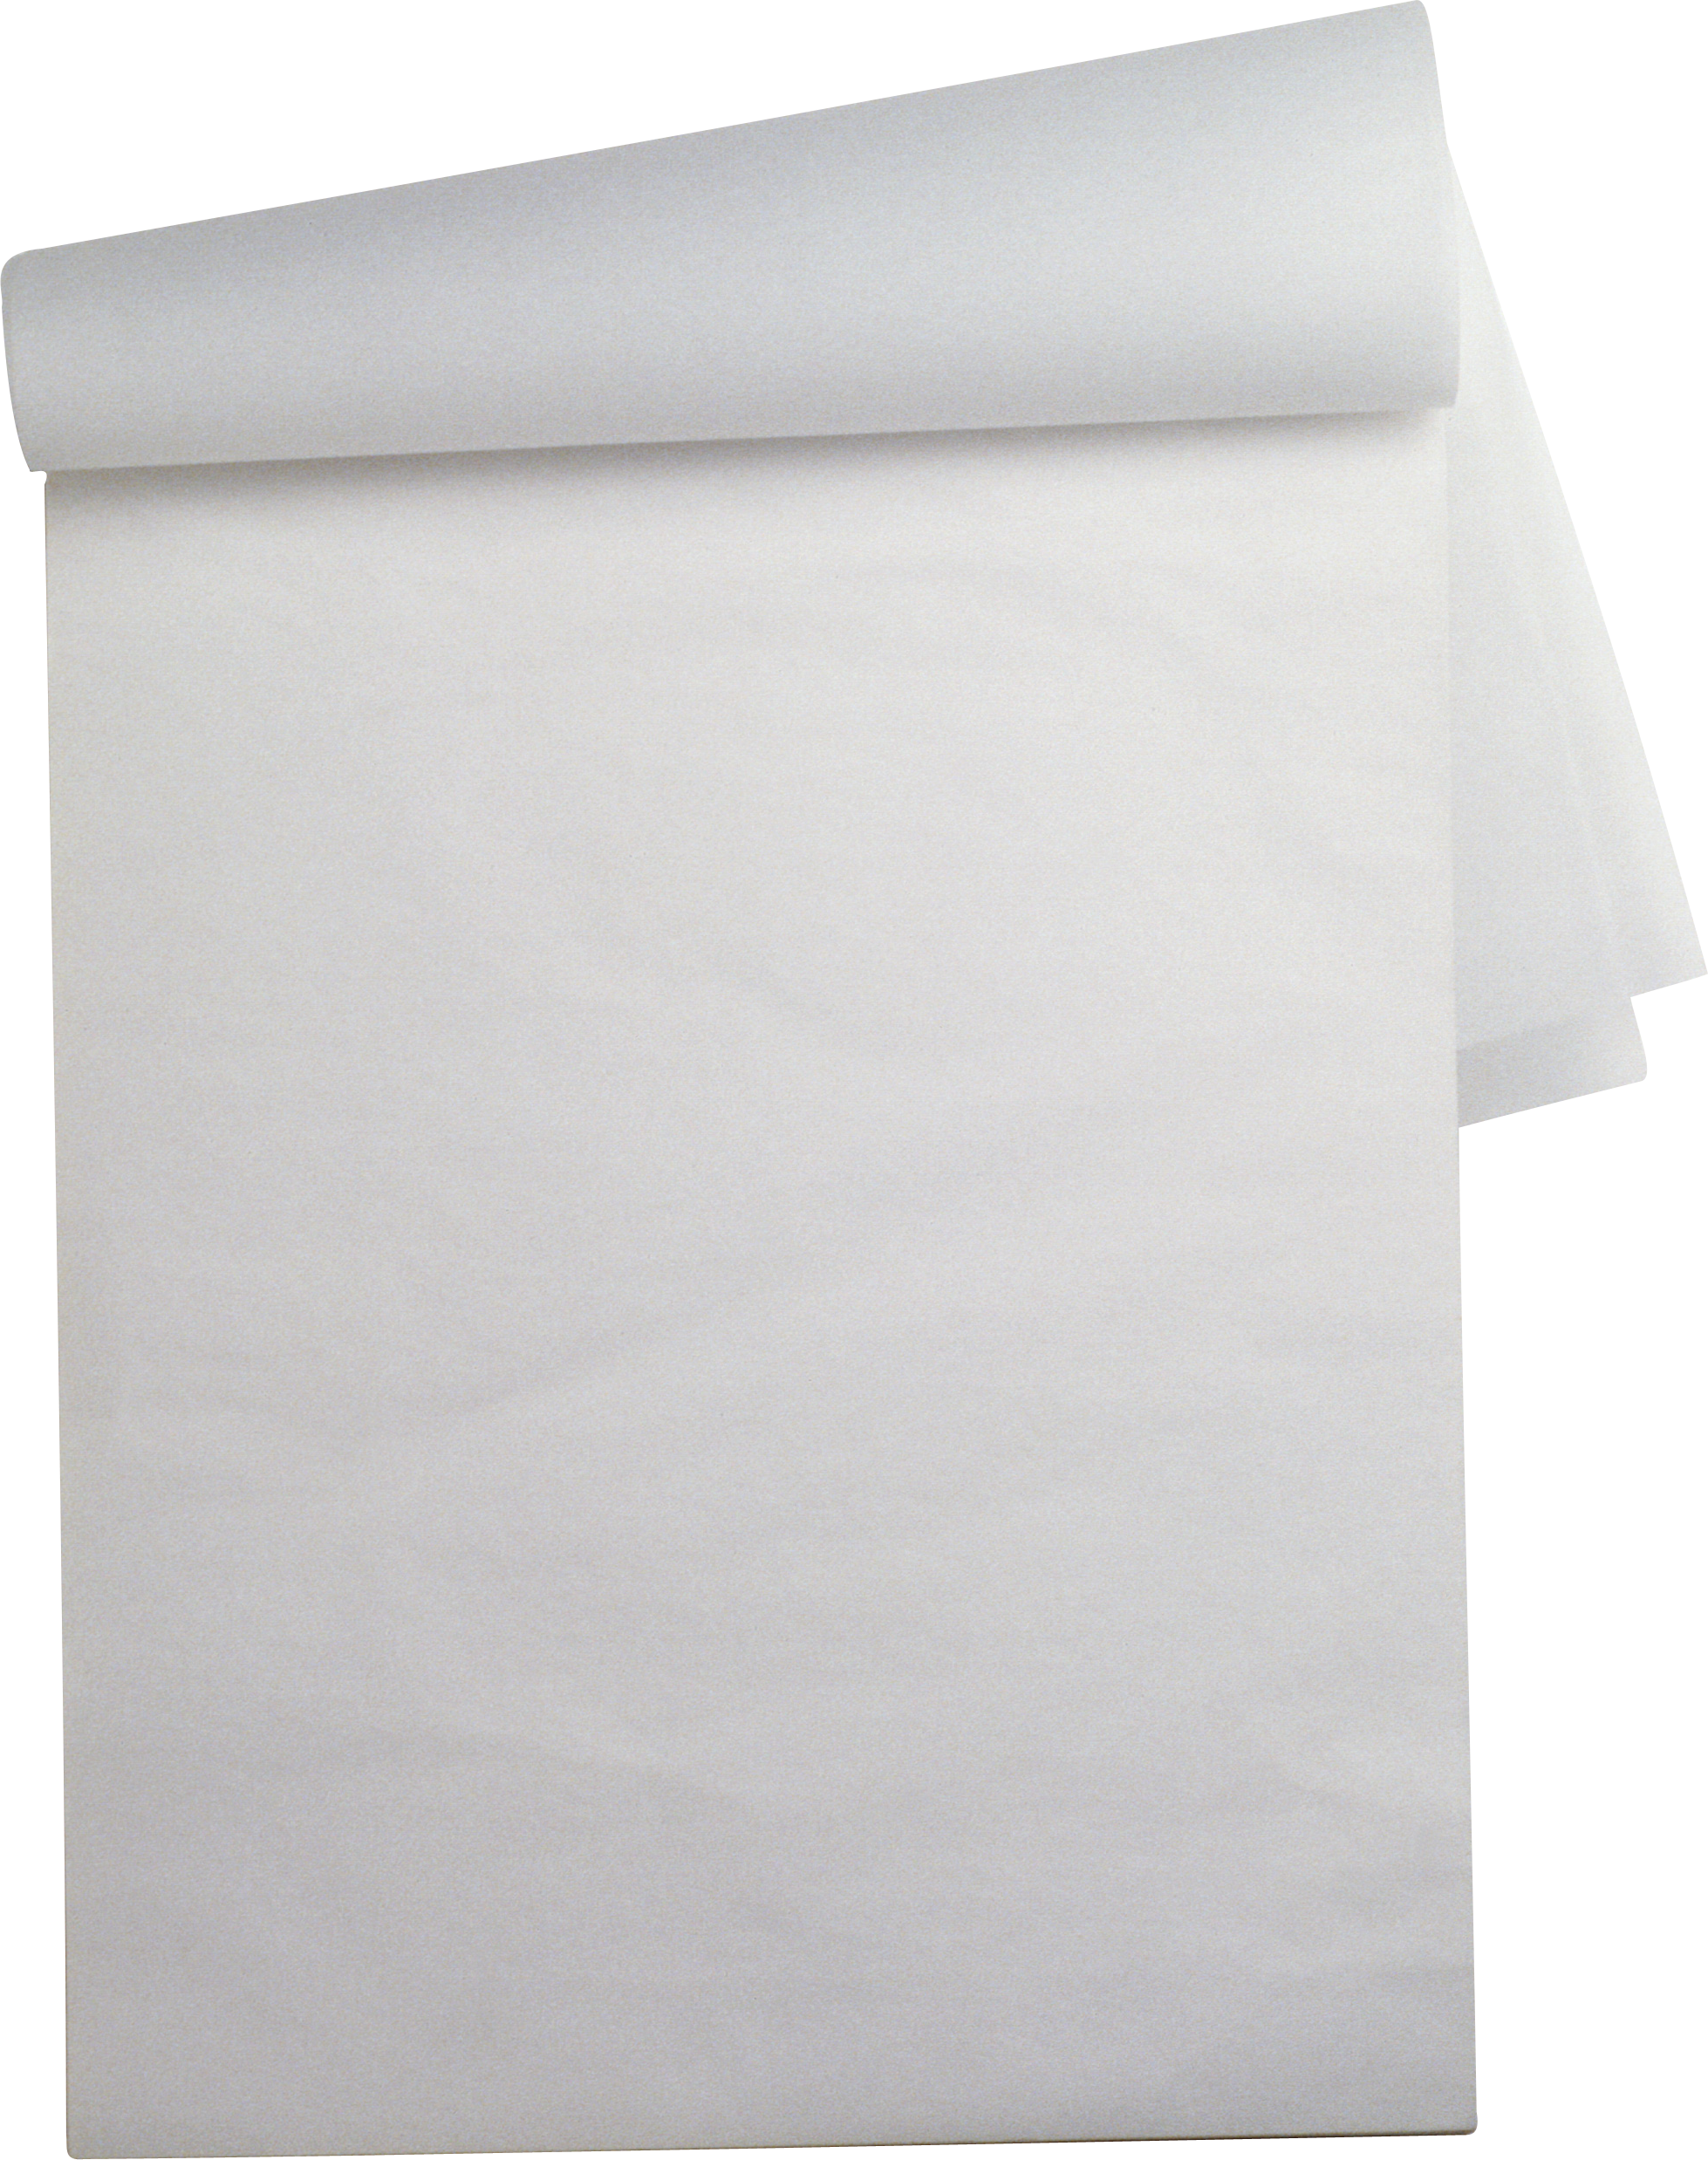 paper sheet png transparent images download #14705